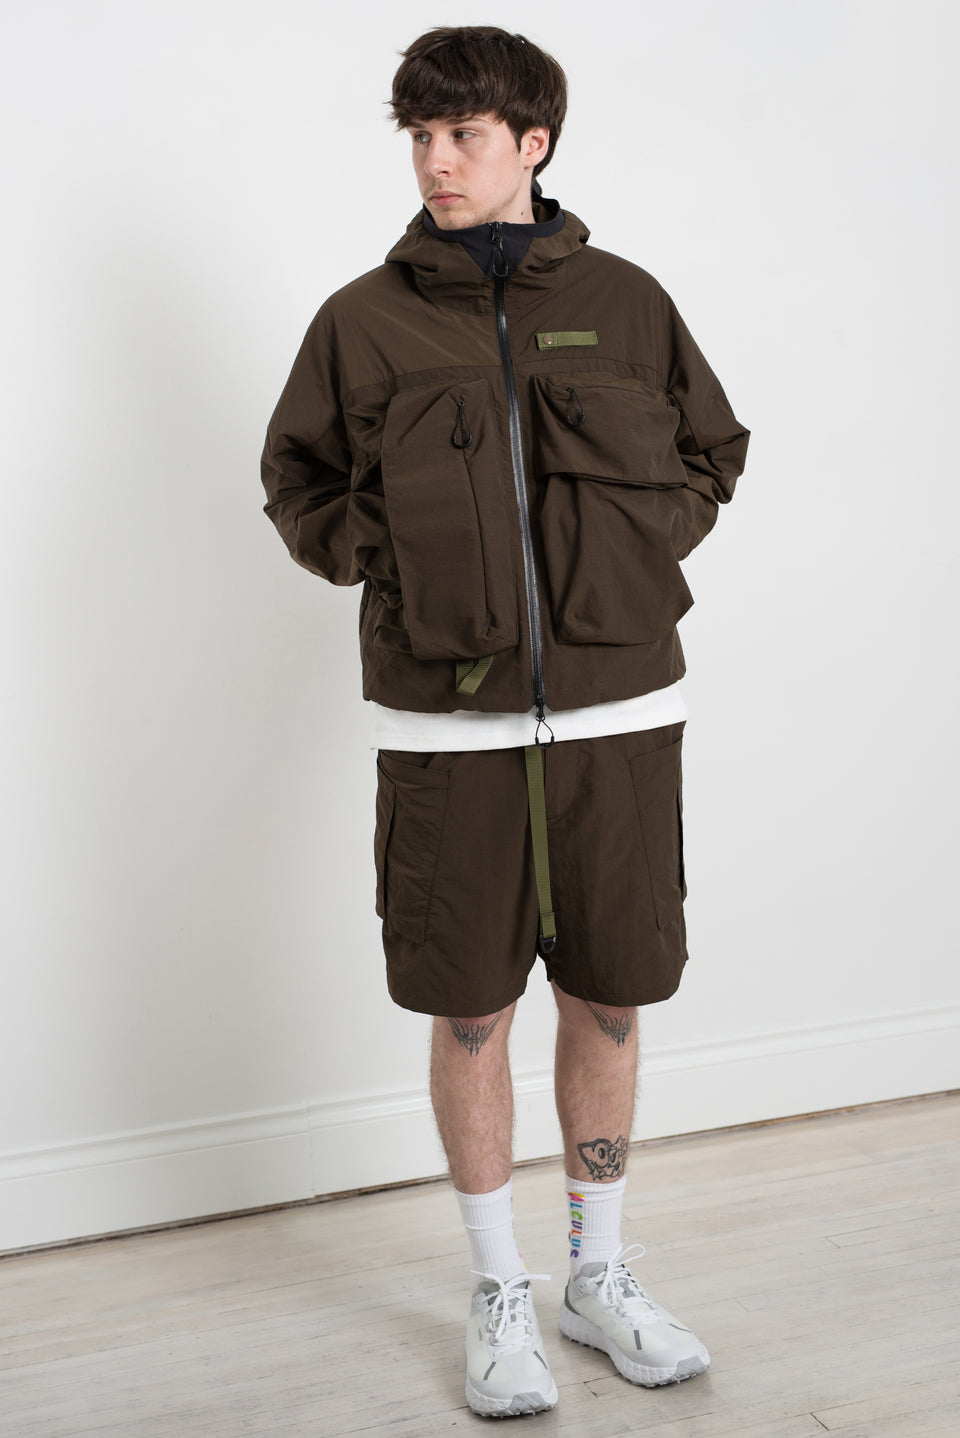 CMF Outdoor Garment 23SS SS23 Comfy Outdoor Garment CMF Fishing Jacket Khaki Calculus Victoria BC Canada